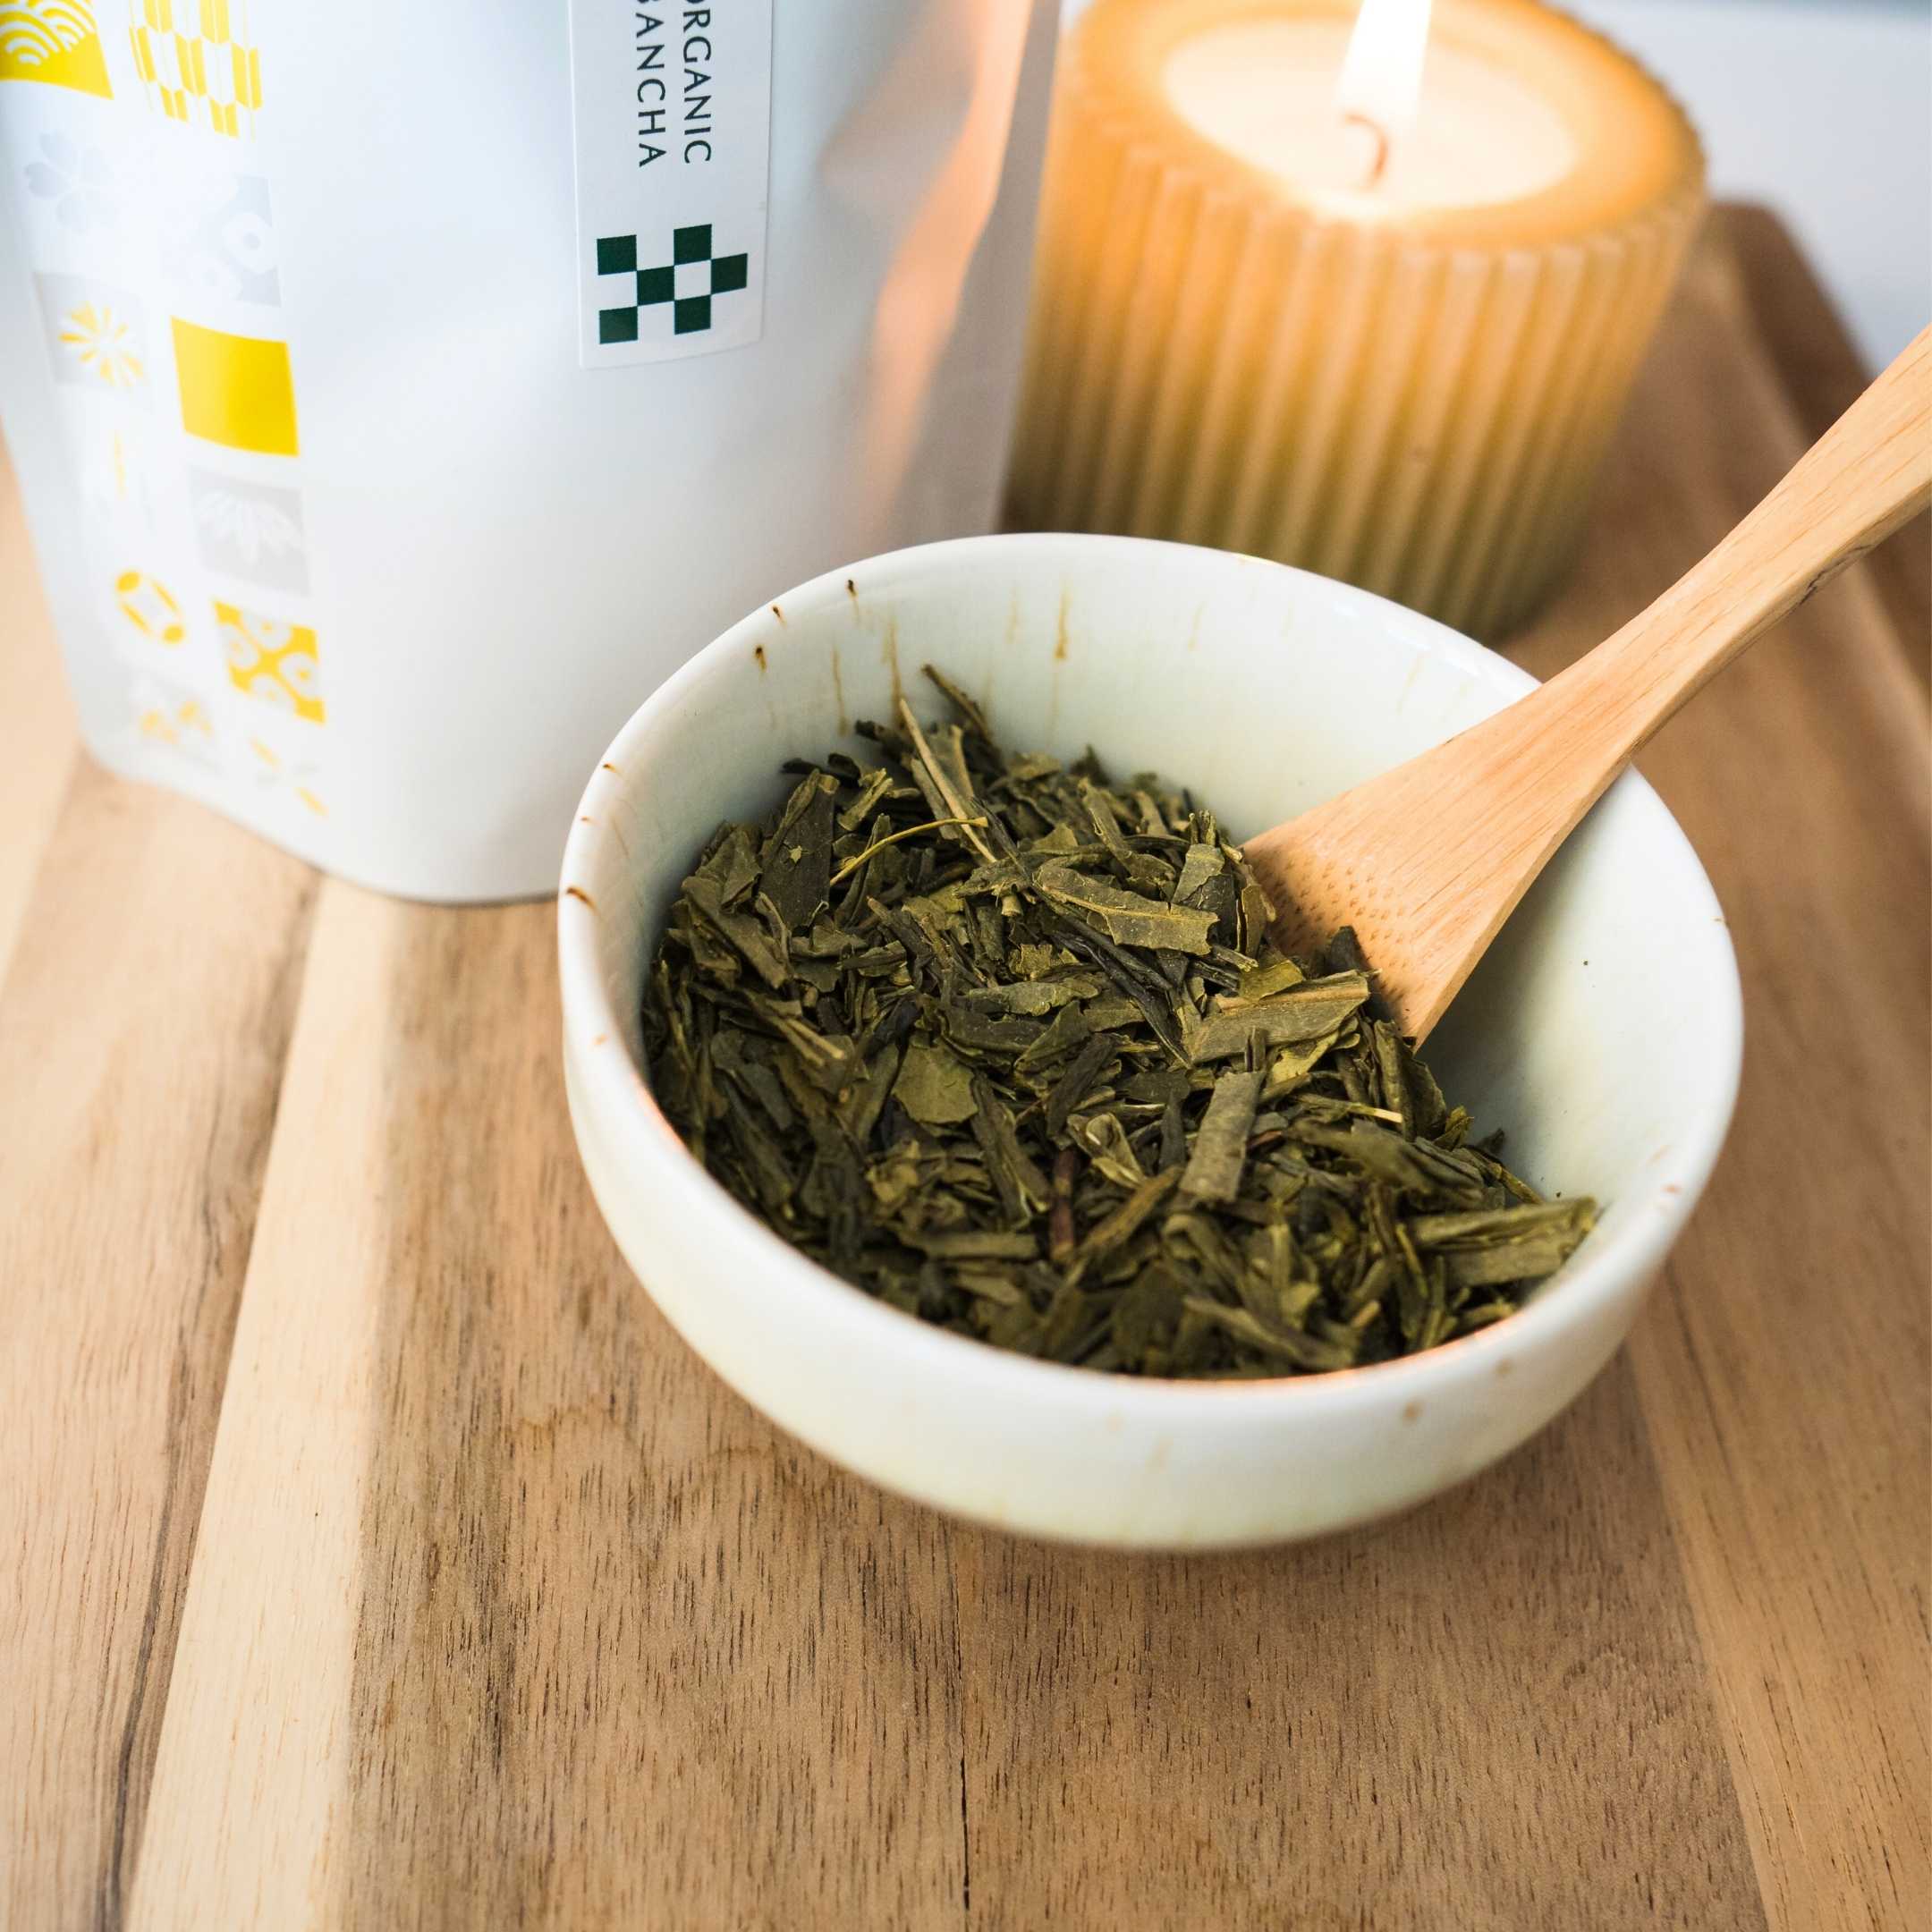 Bancha - Organic Loose Leaf Tea | 100g